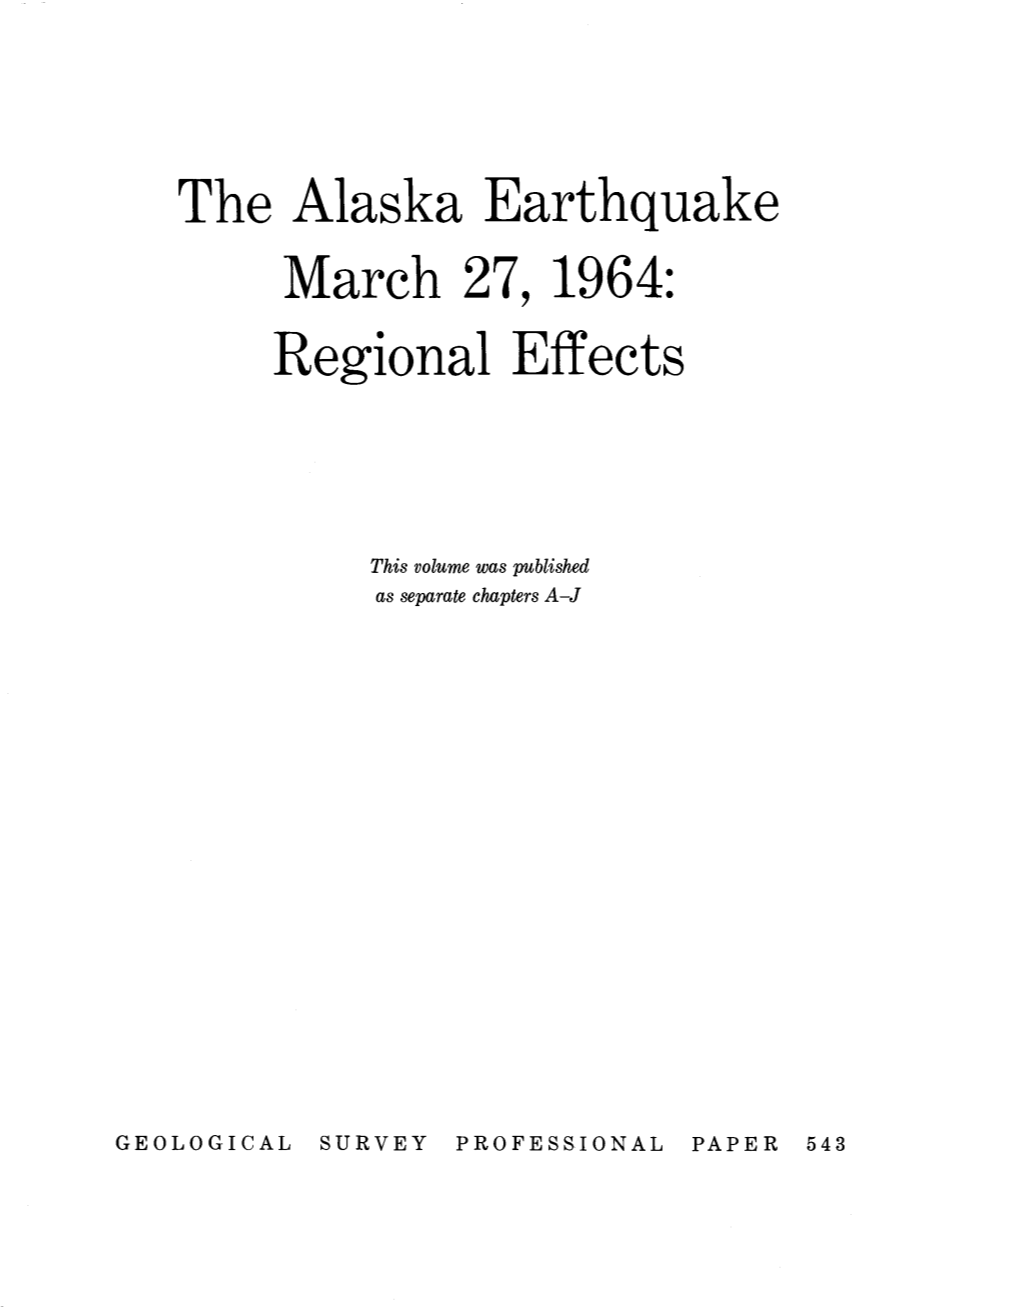 The Alaska Earthquake Regional Effects